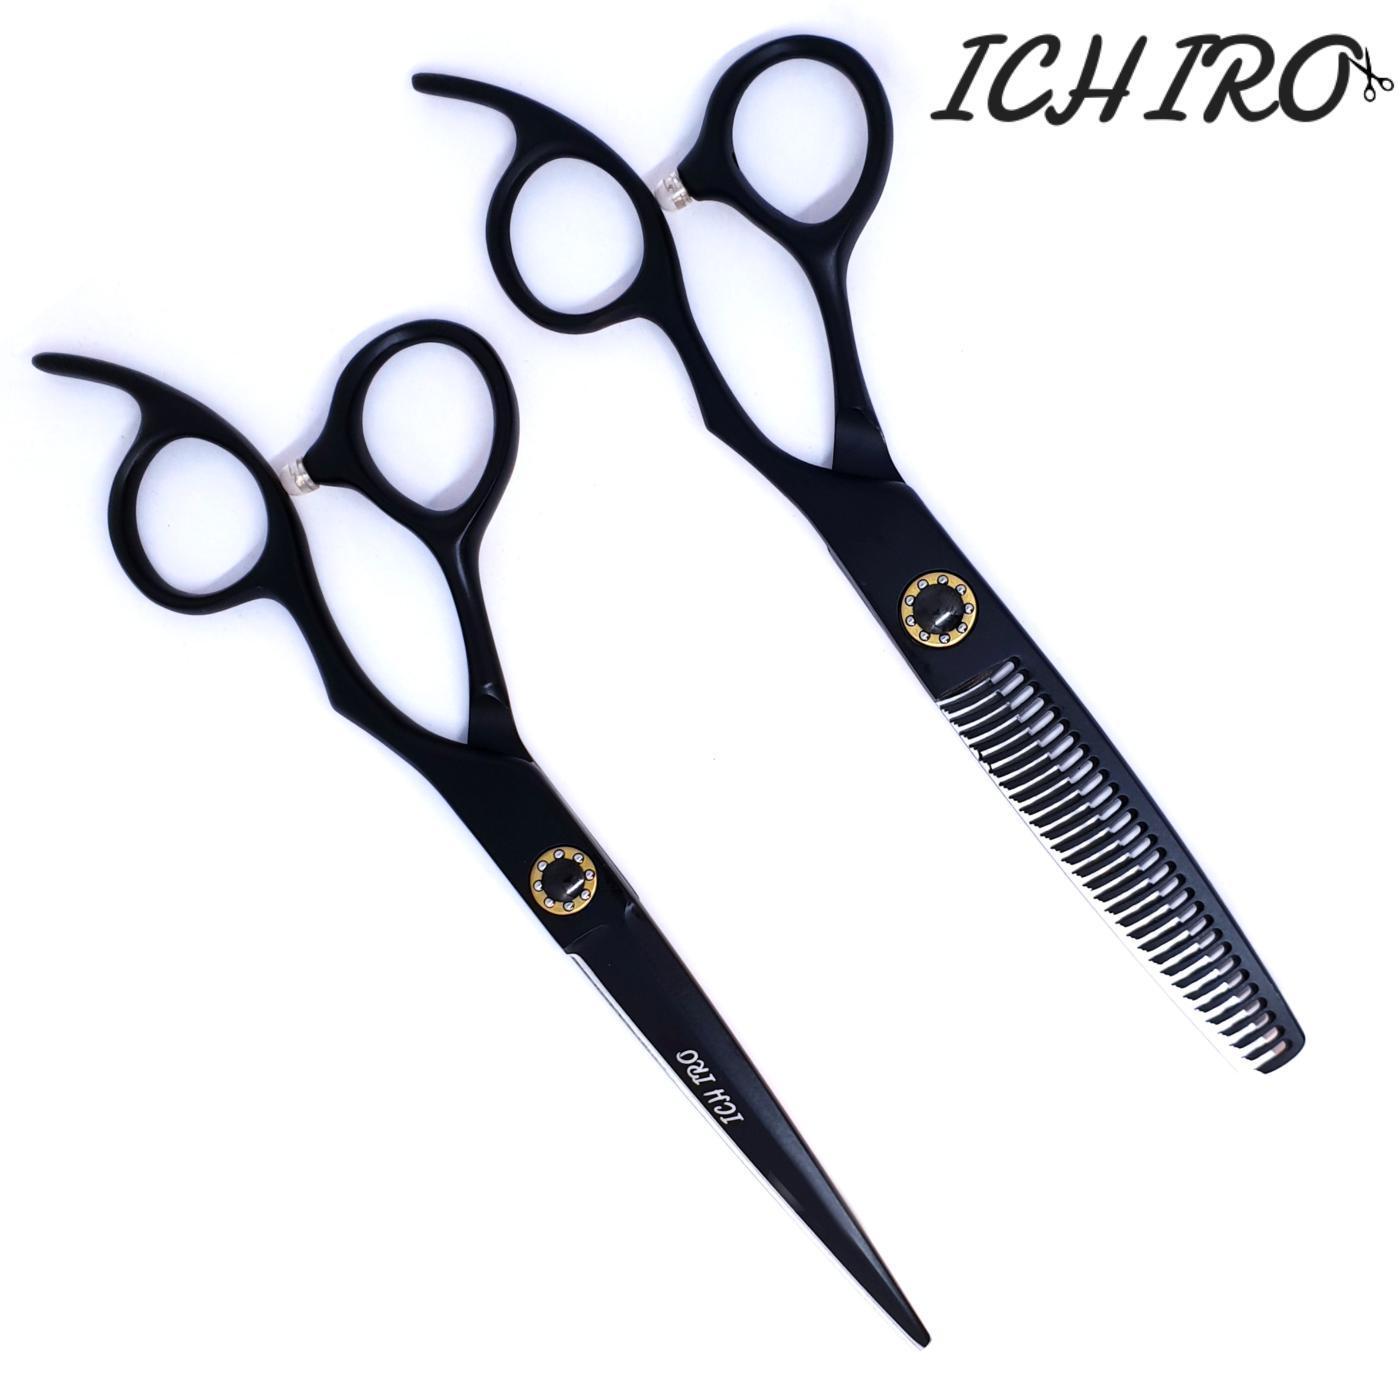 The Ichiro Matte Black Hair Scissor Set